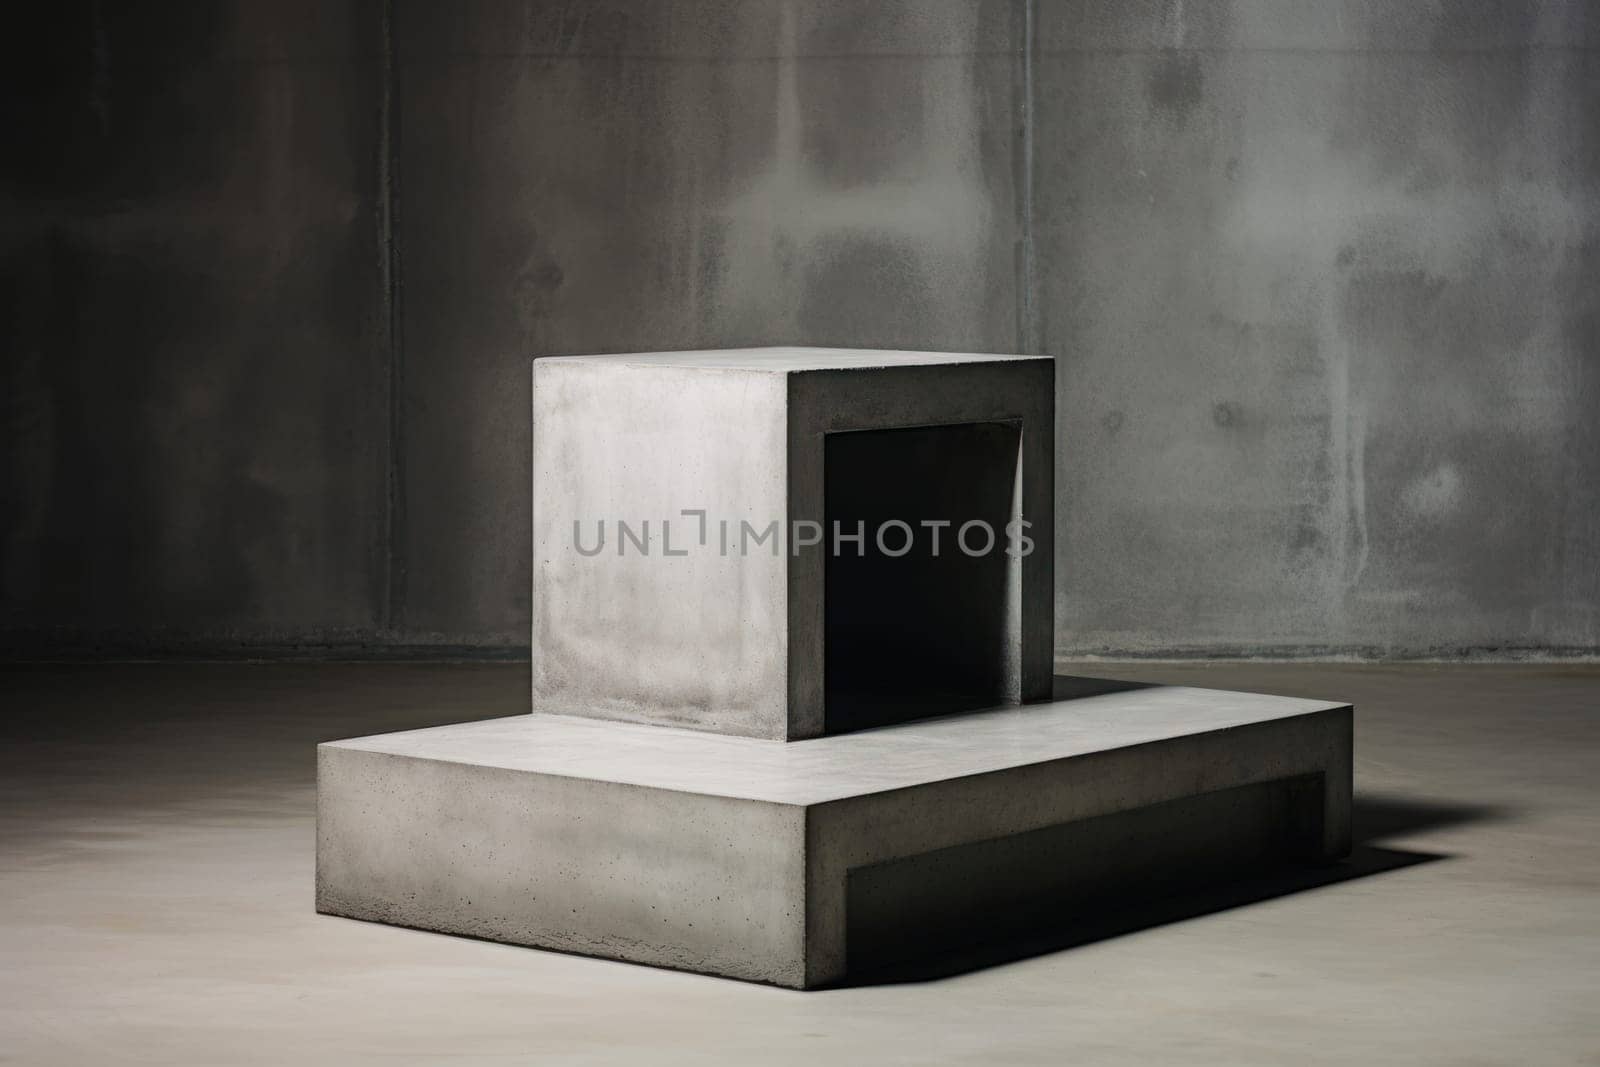 Textured Stone concrete podium. Generate Ai by ylivdesign